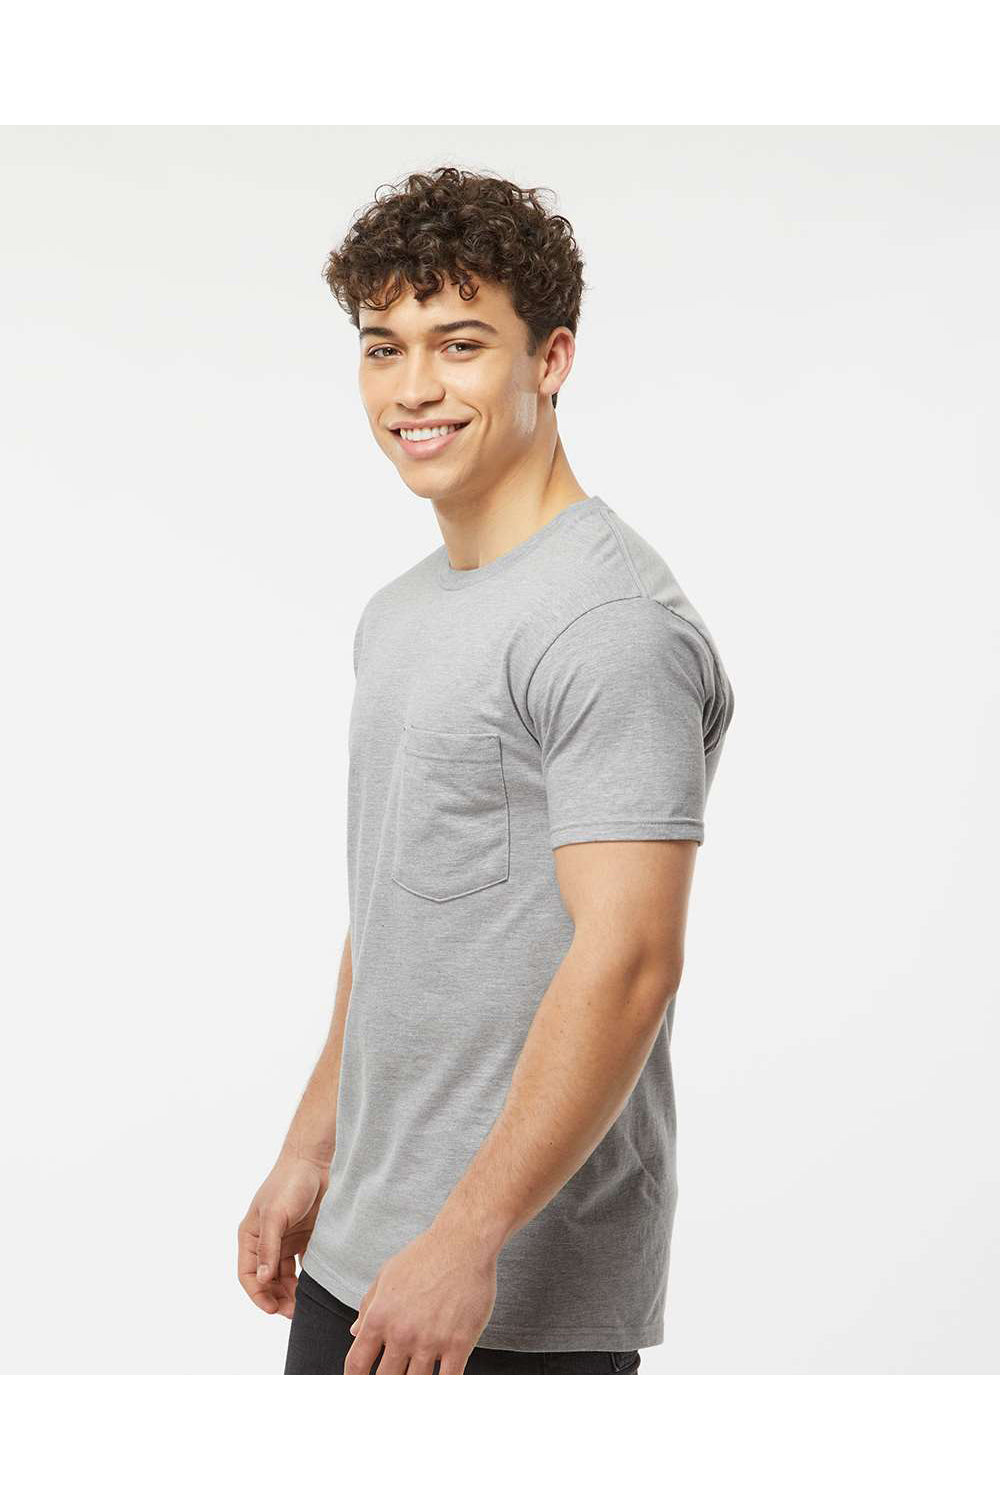 Tultex 293 Mens Jersey Short Sleeve Crewneck T-Shirt w/ Pocket Heather Grey Model Side